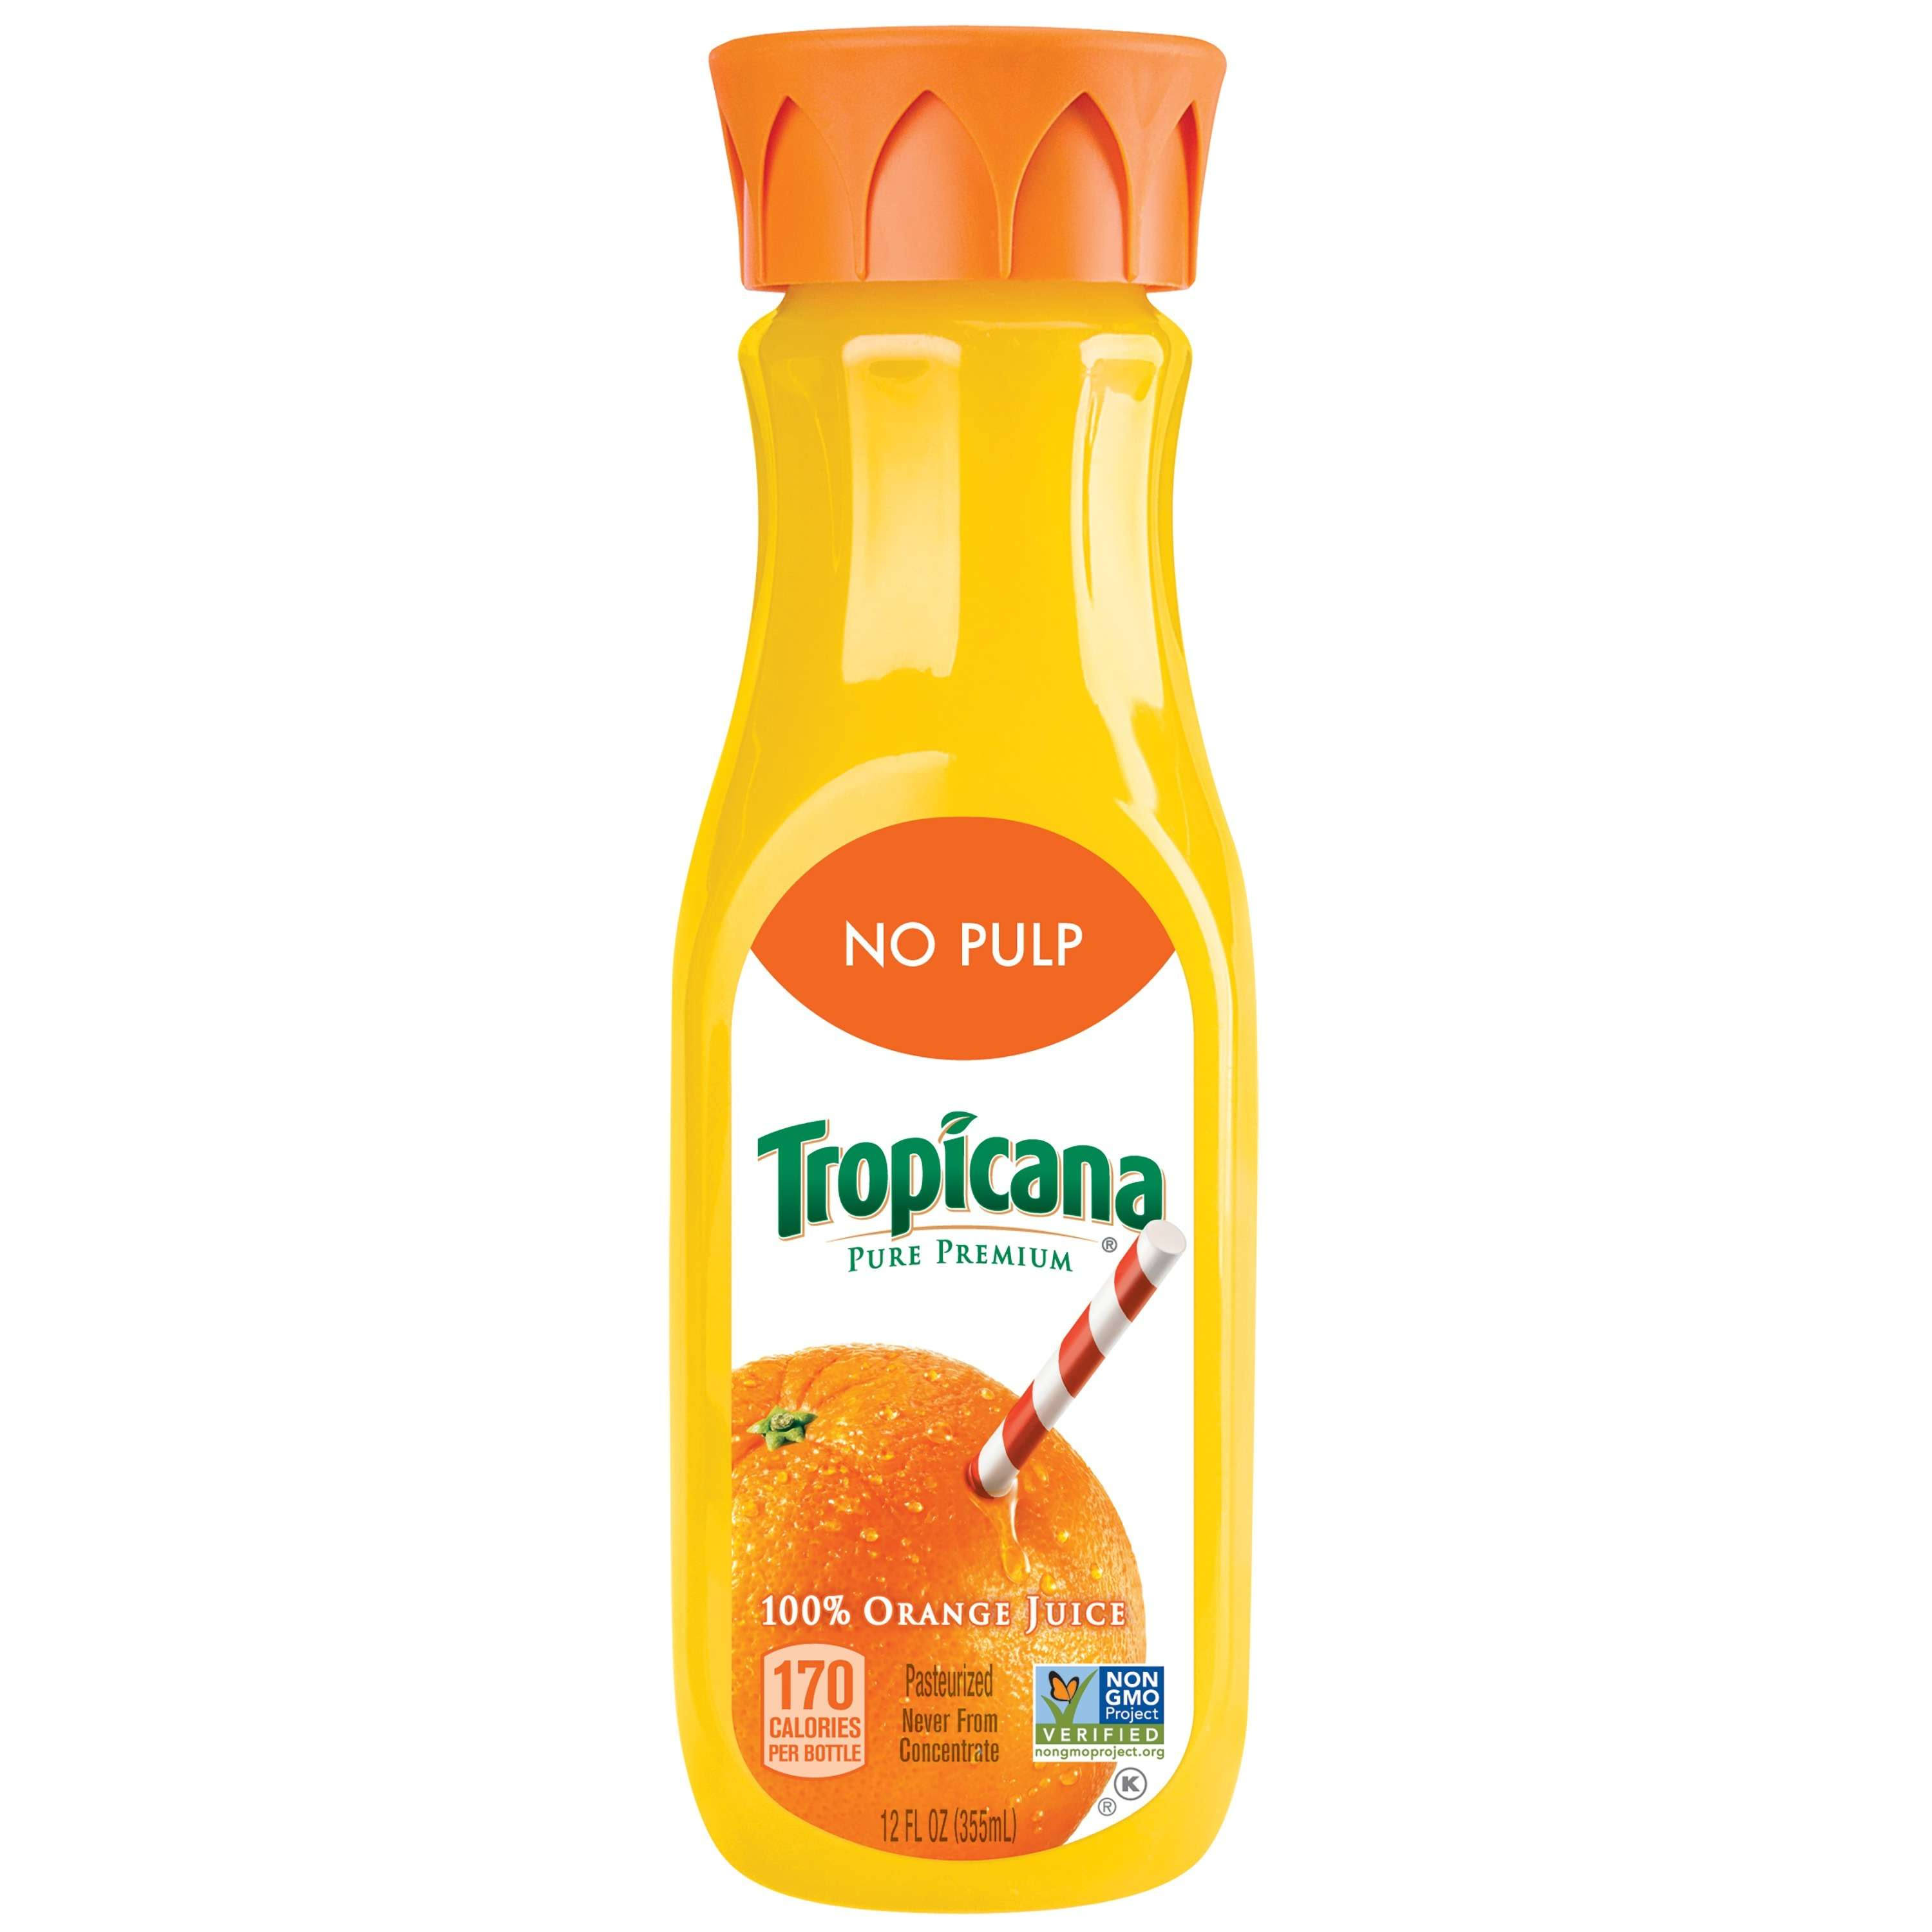 Tropicana Pure Premium No Pulp 100% Orange Juice